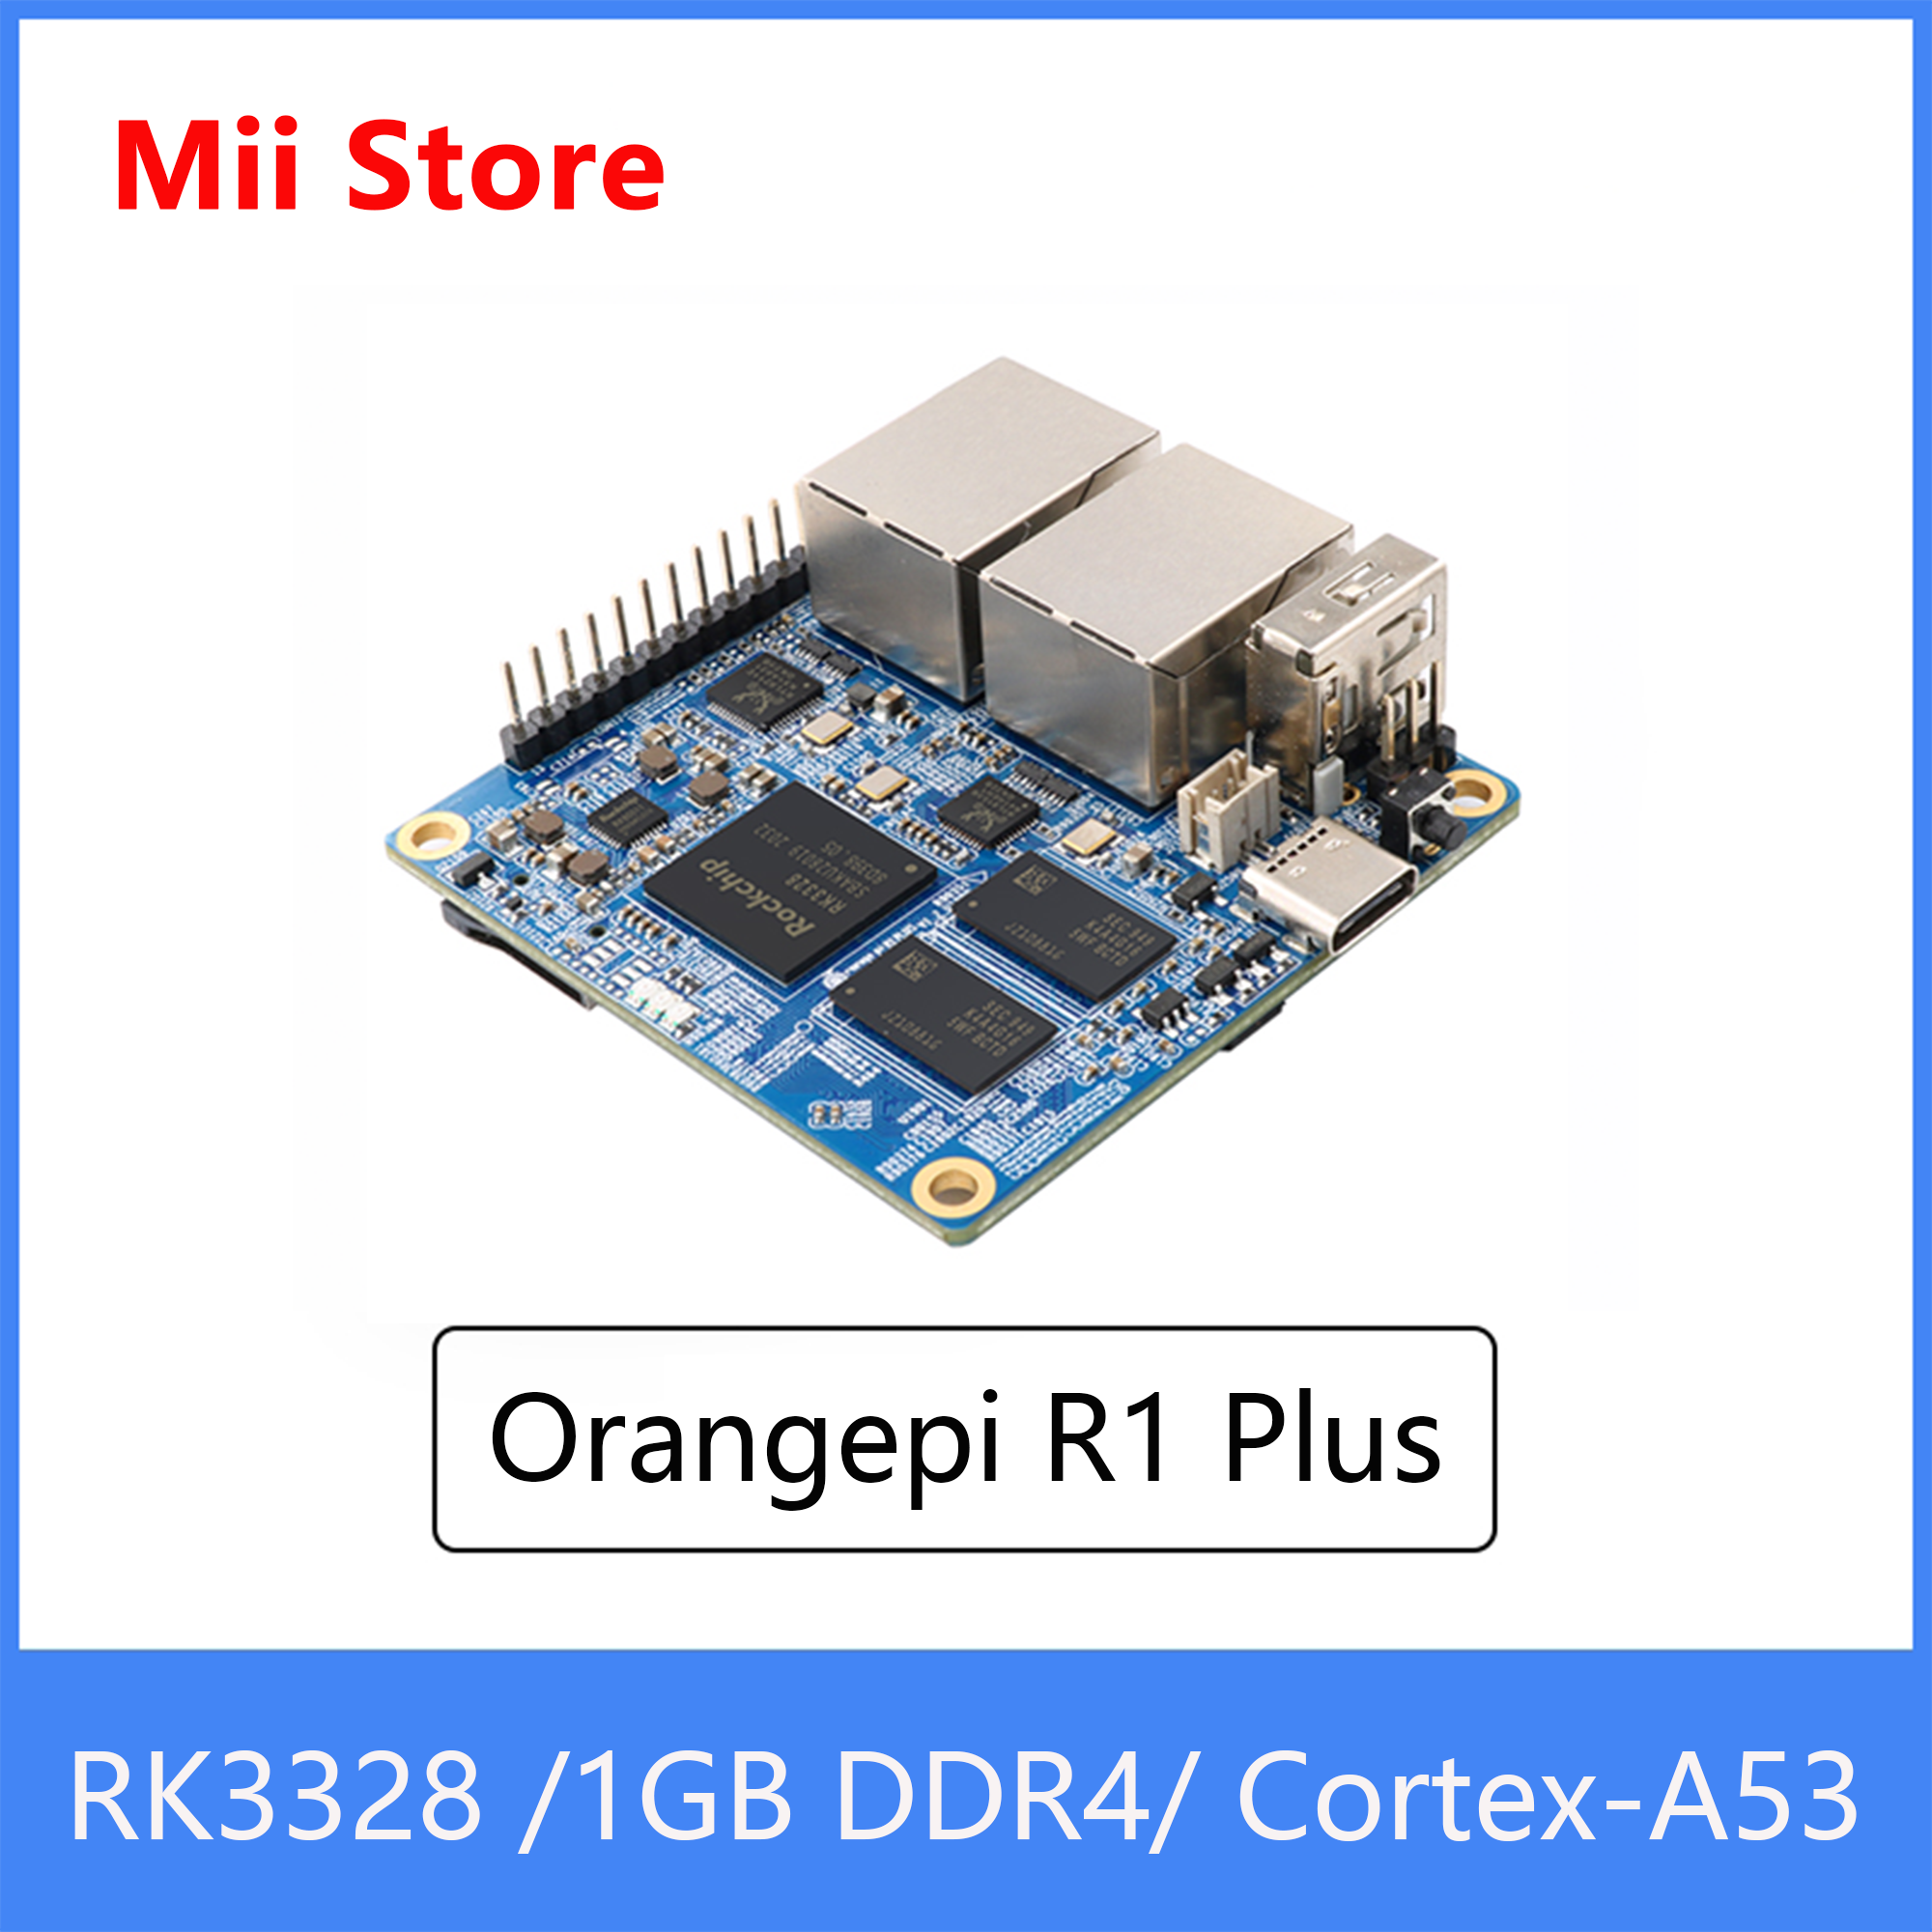 Orange Pi R1 Plus LTS 1GB RAM, Rockchip RK3328, ..